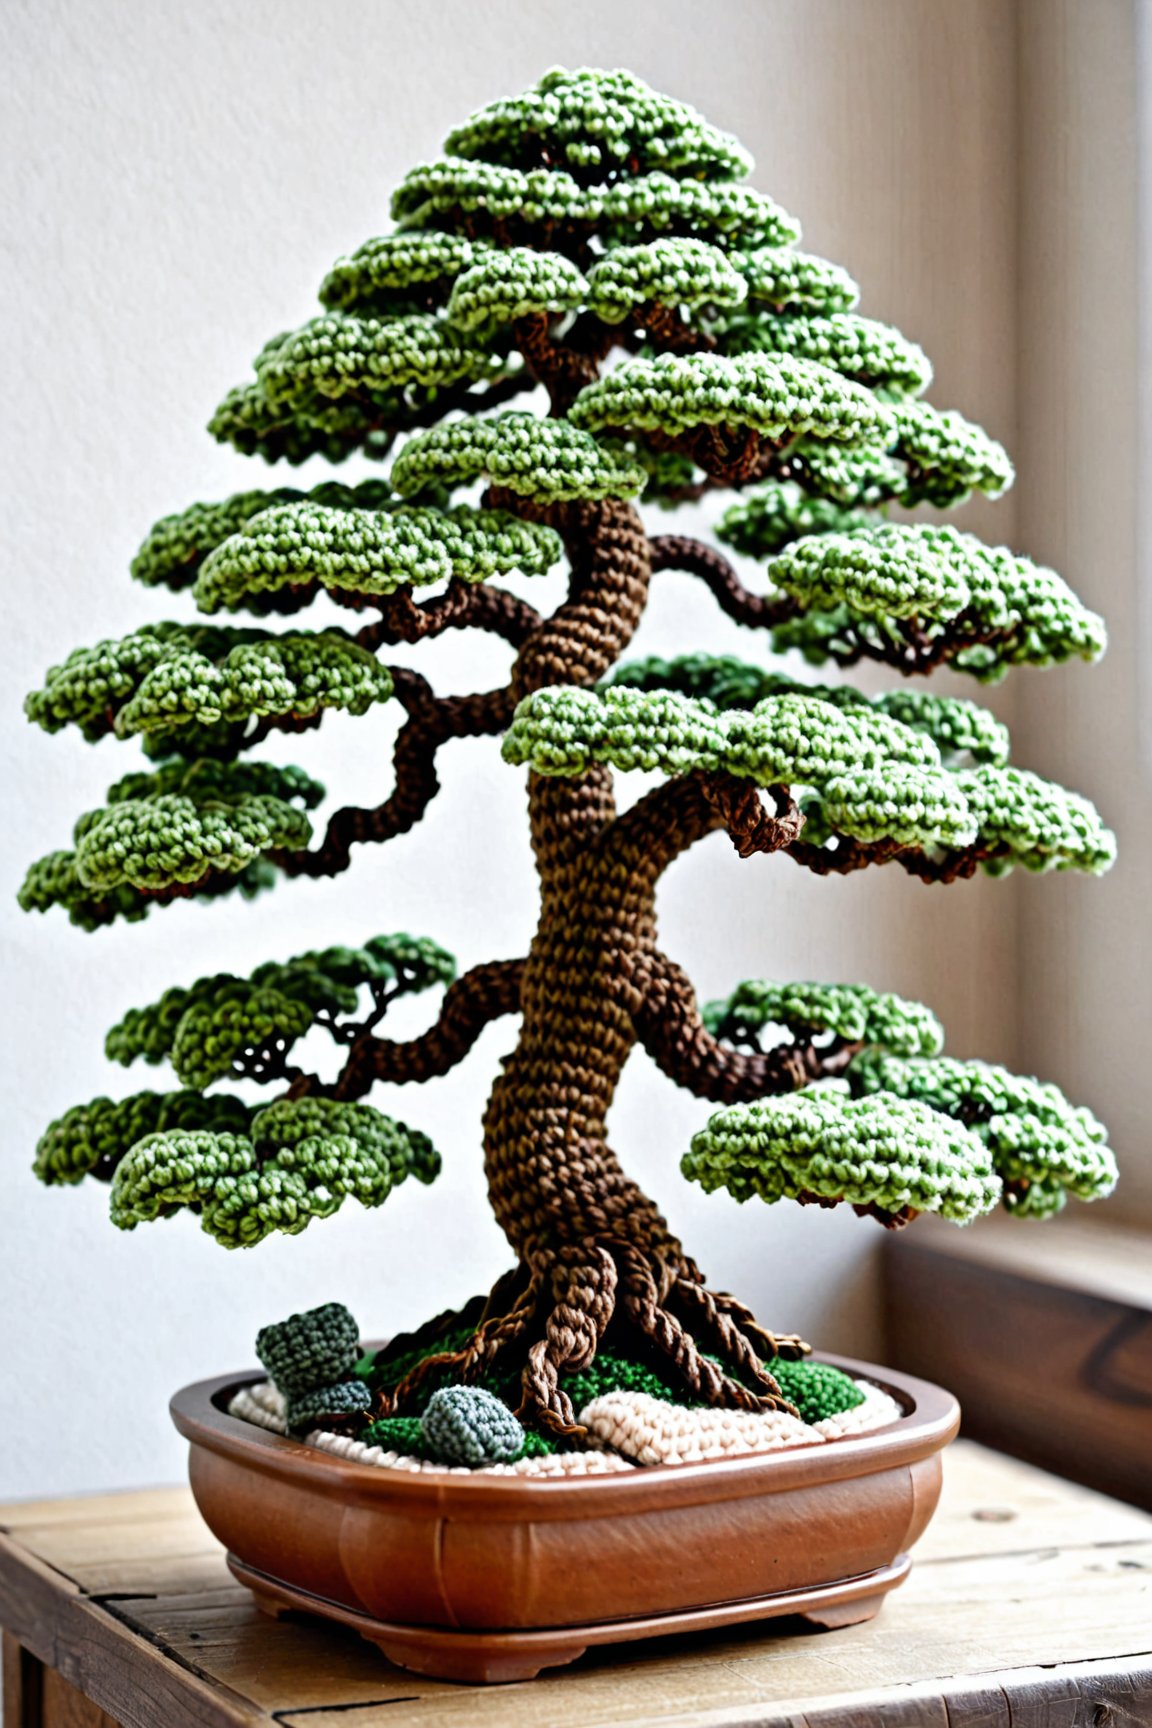 a cute bonsai tree, detailed textures, ultra sharp, crocheted